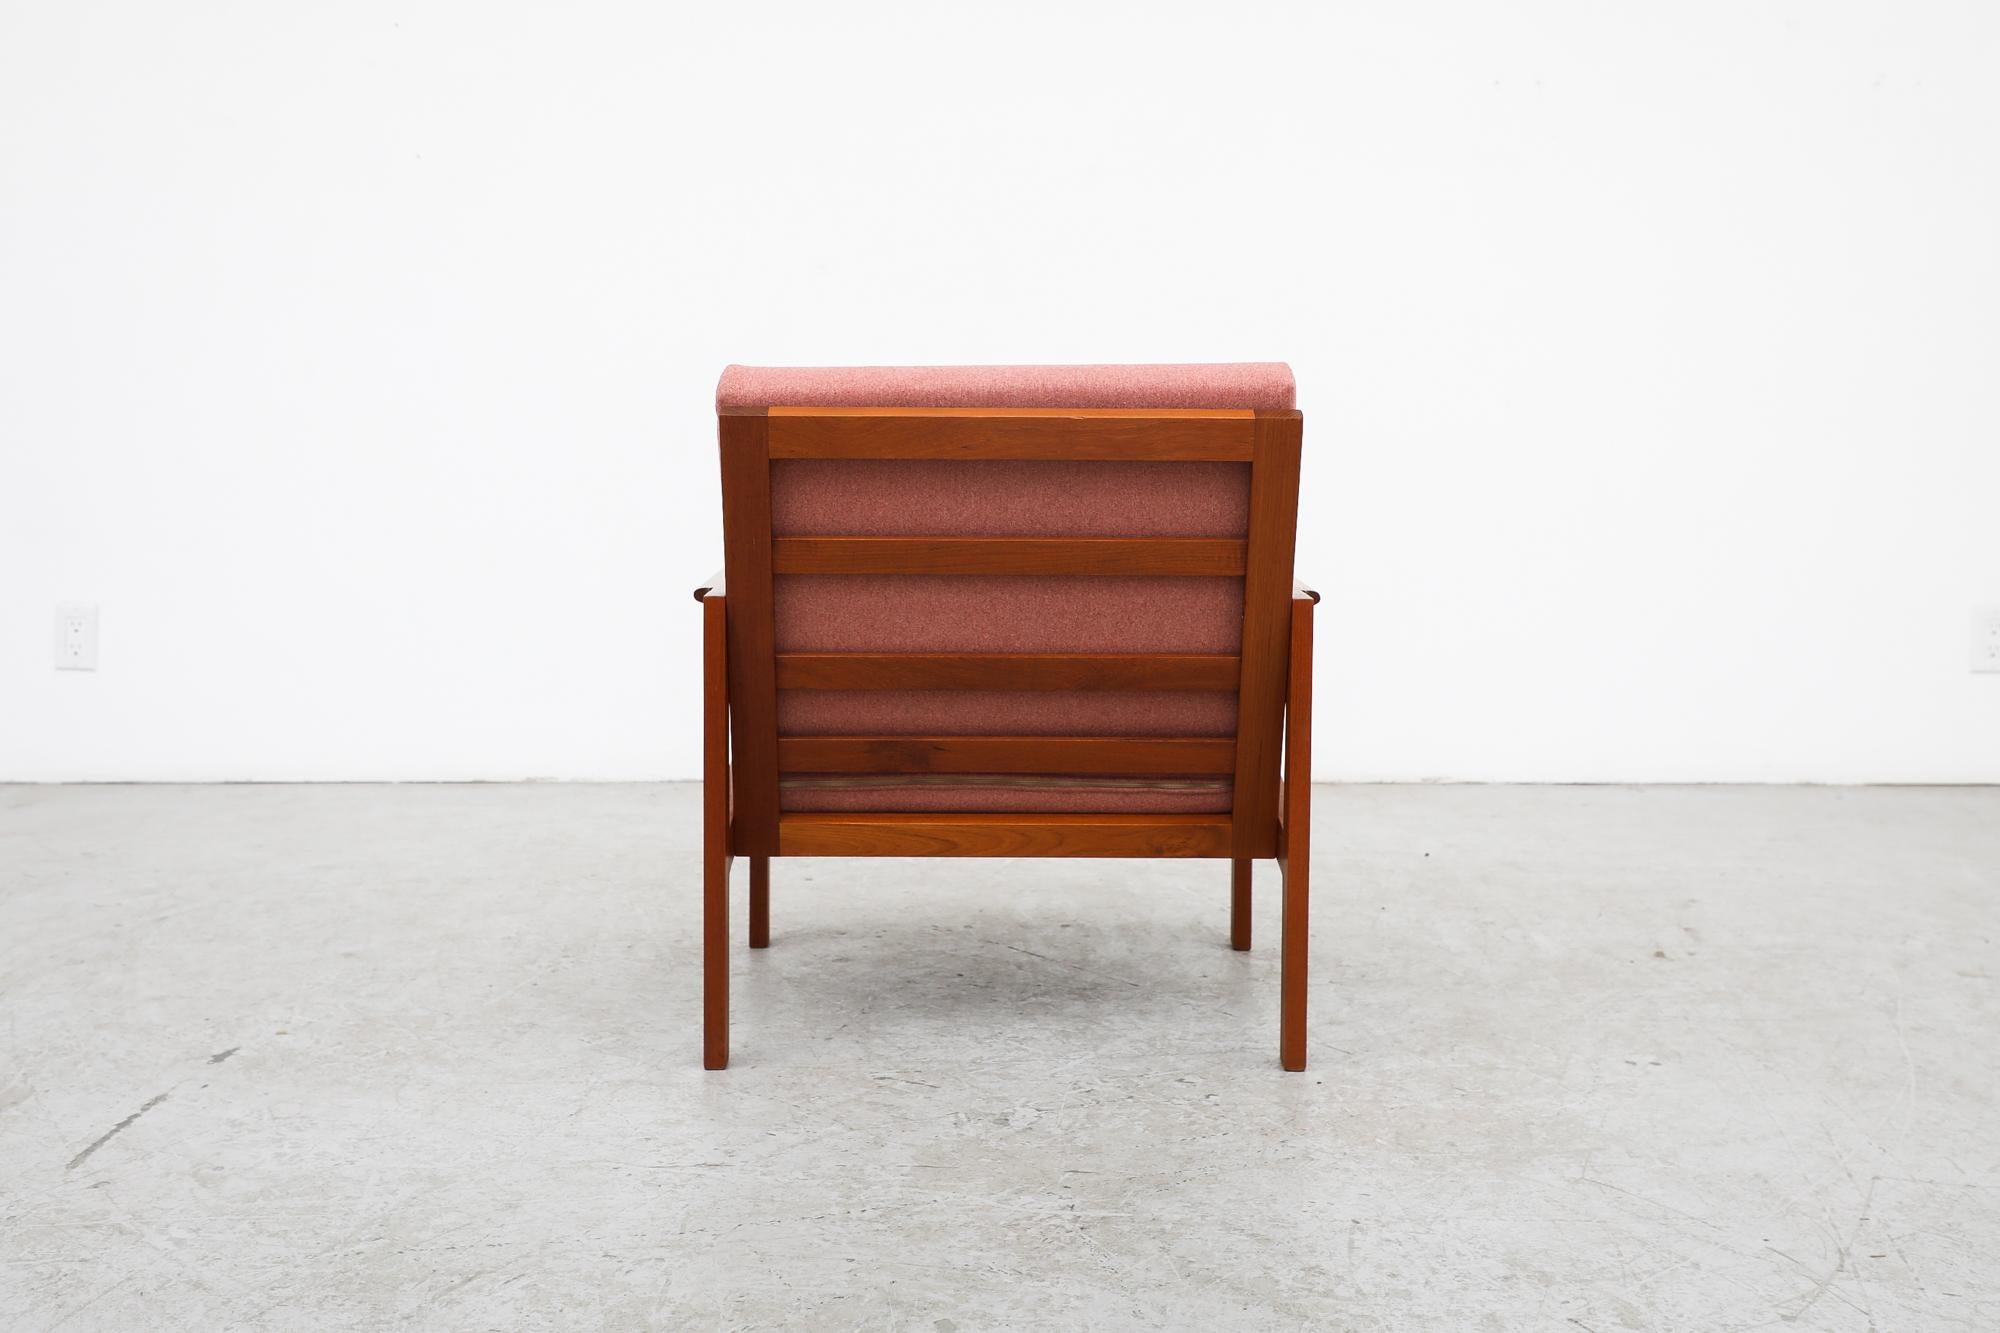 Upholstery Niels Eilersen/Ilium Wikkelso Pink 'Capella' Chair, 1960's Denmark